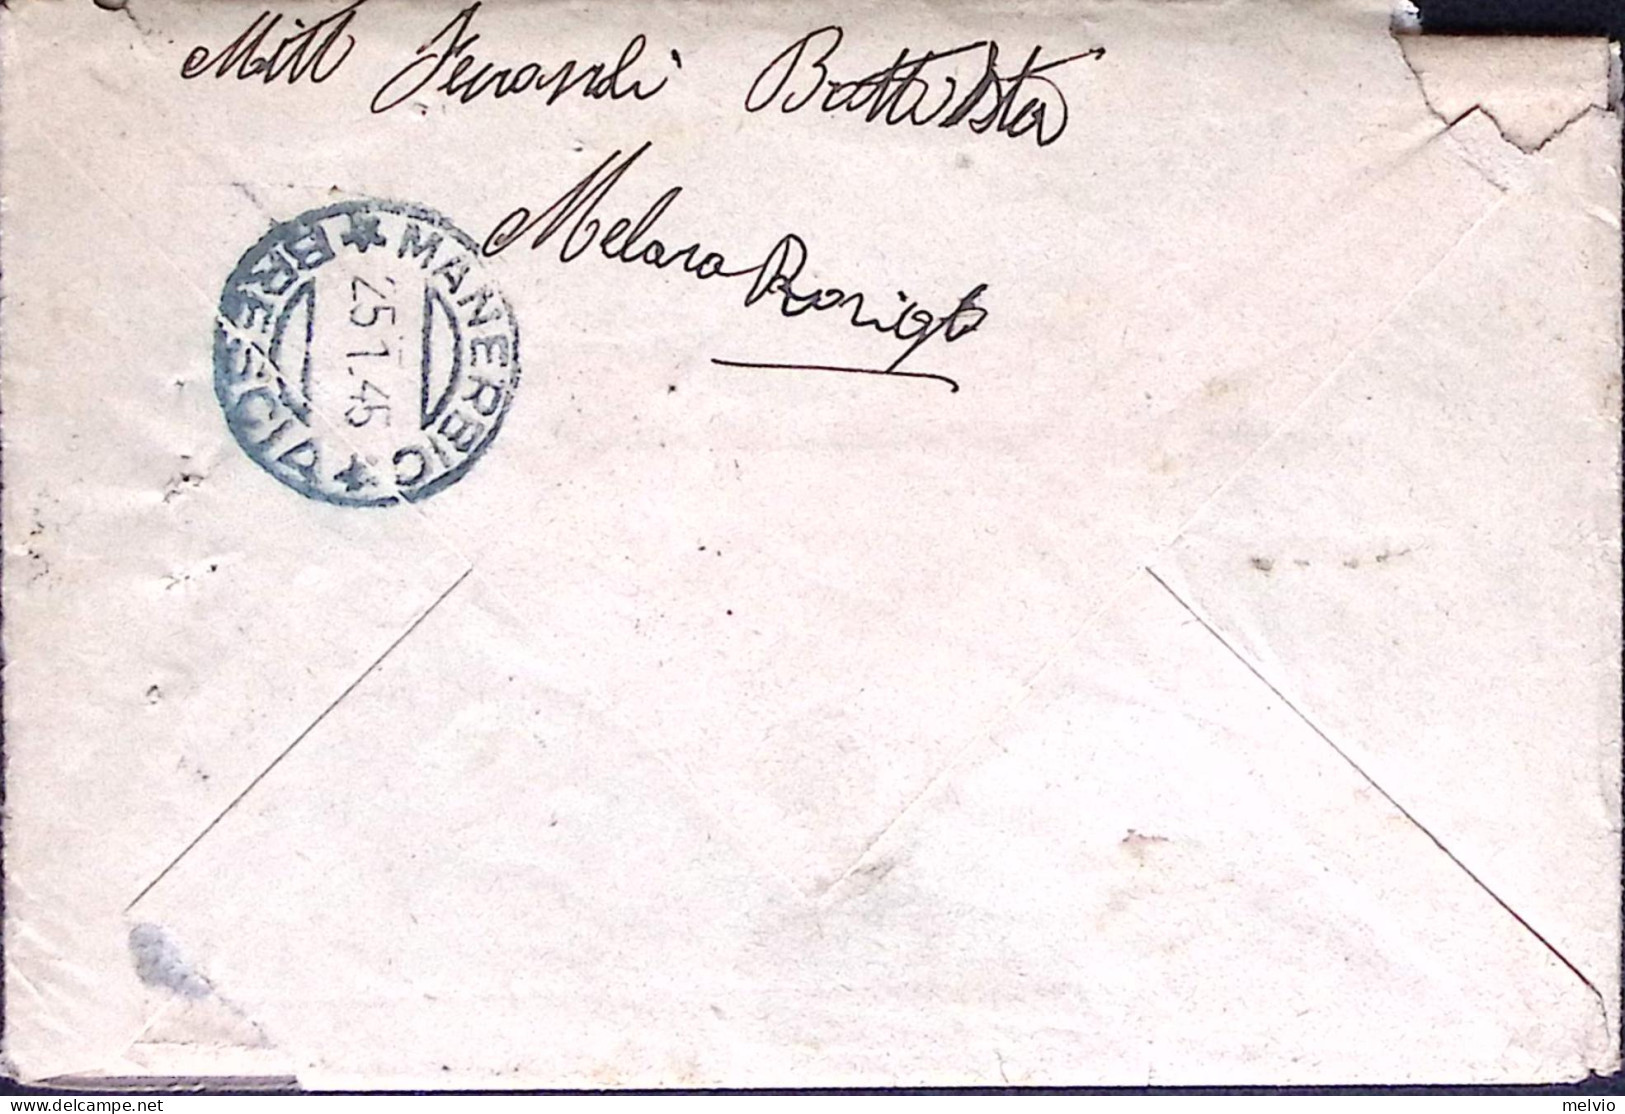 1945-R.S.I. MELARA C.2 (17.1) Su Busta Non Affrancata E Tassata - Poststempel